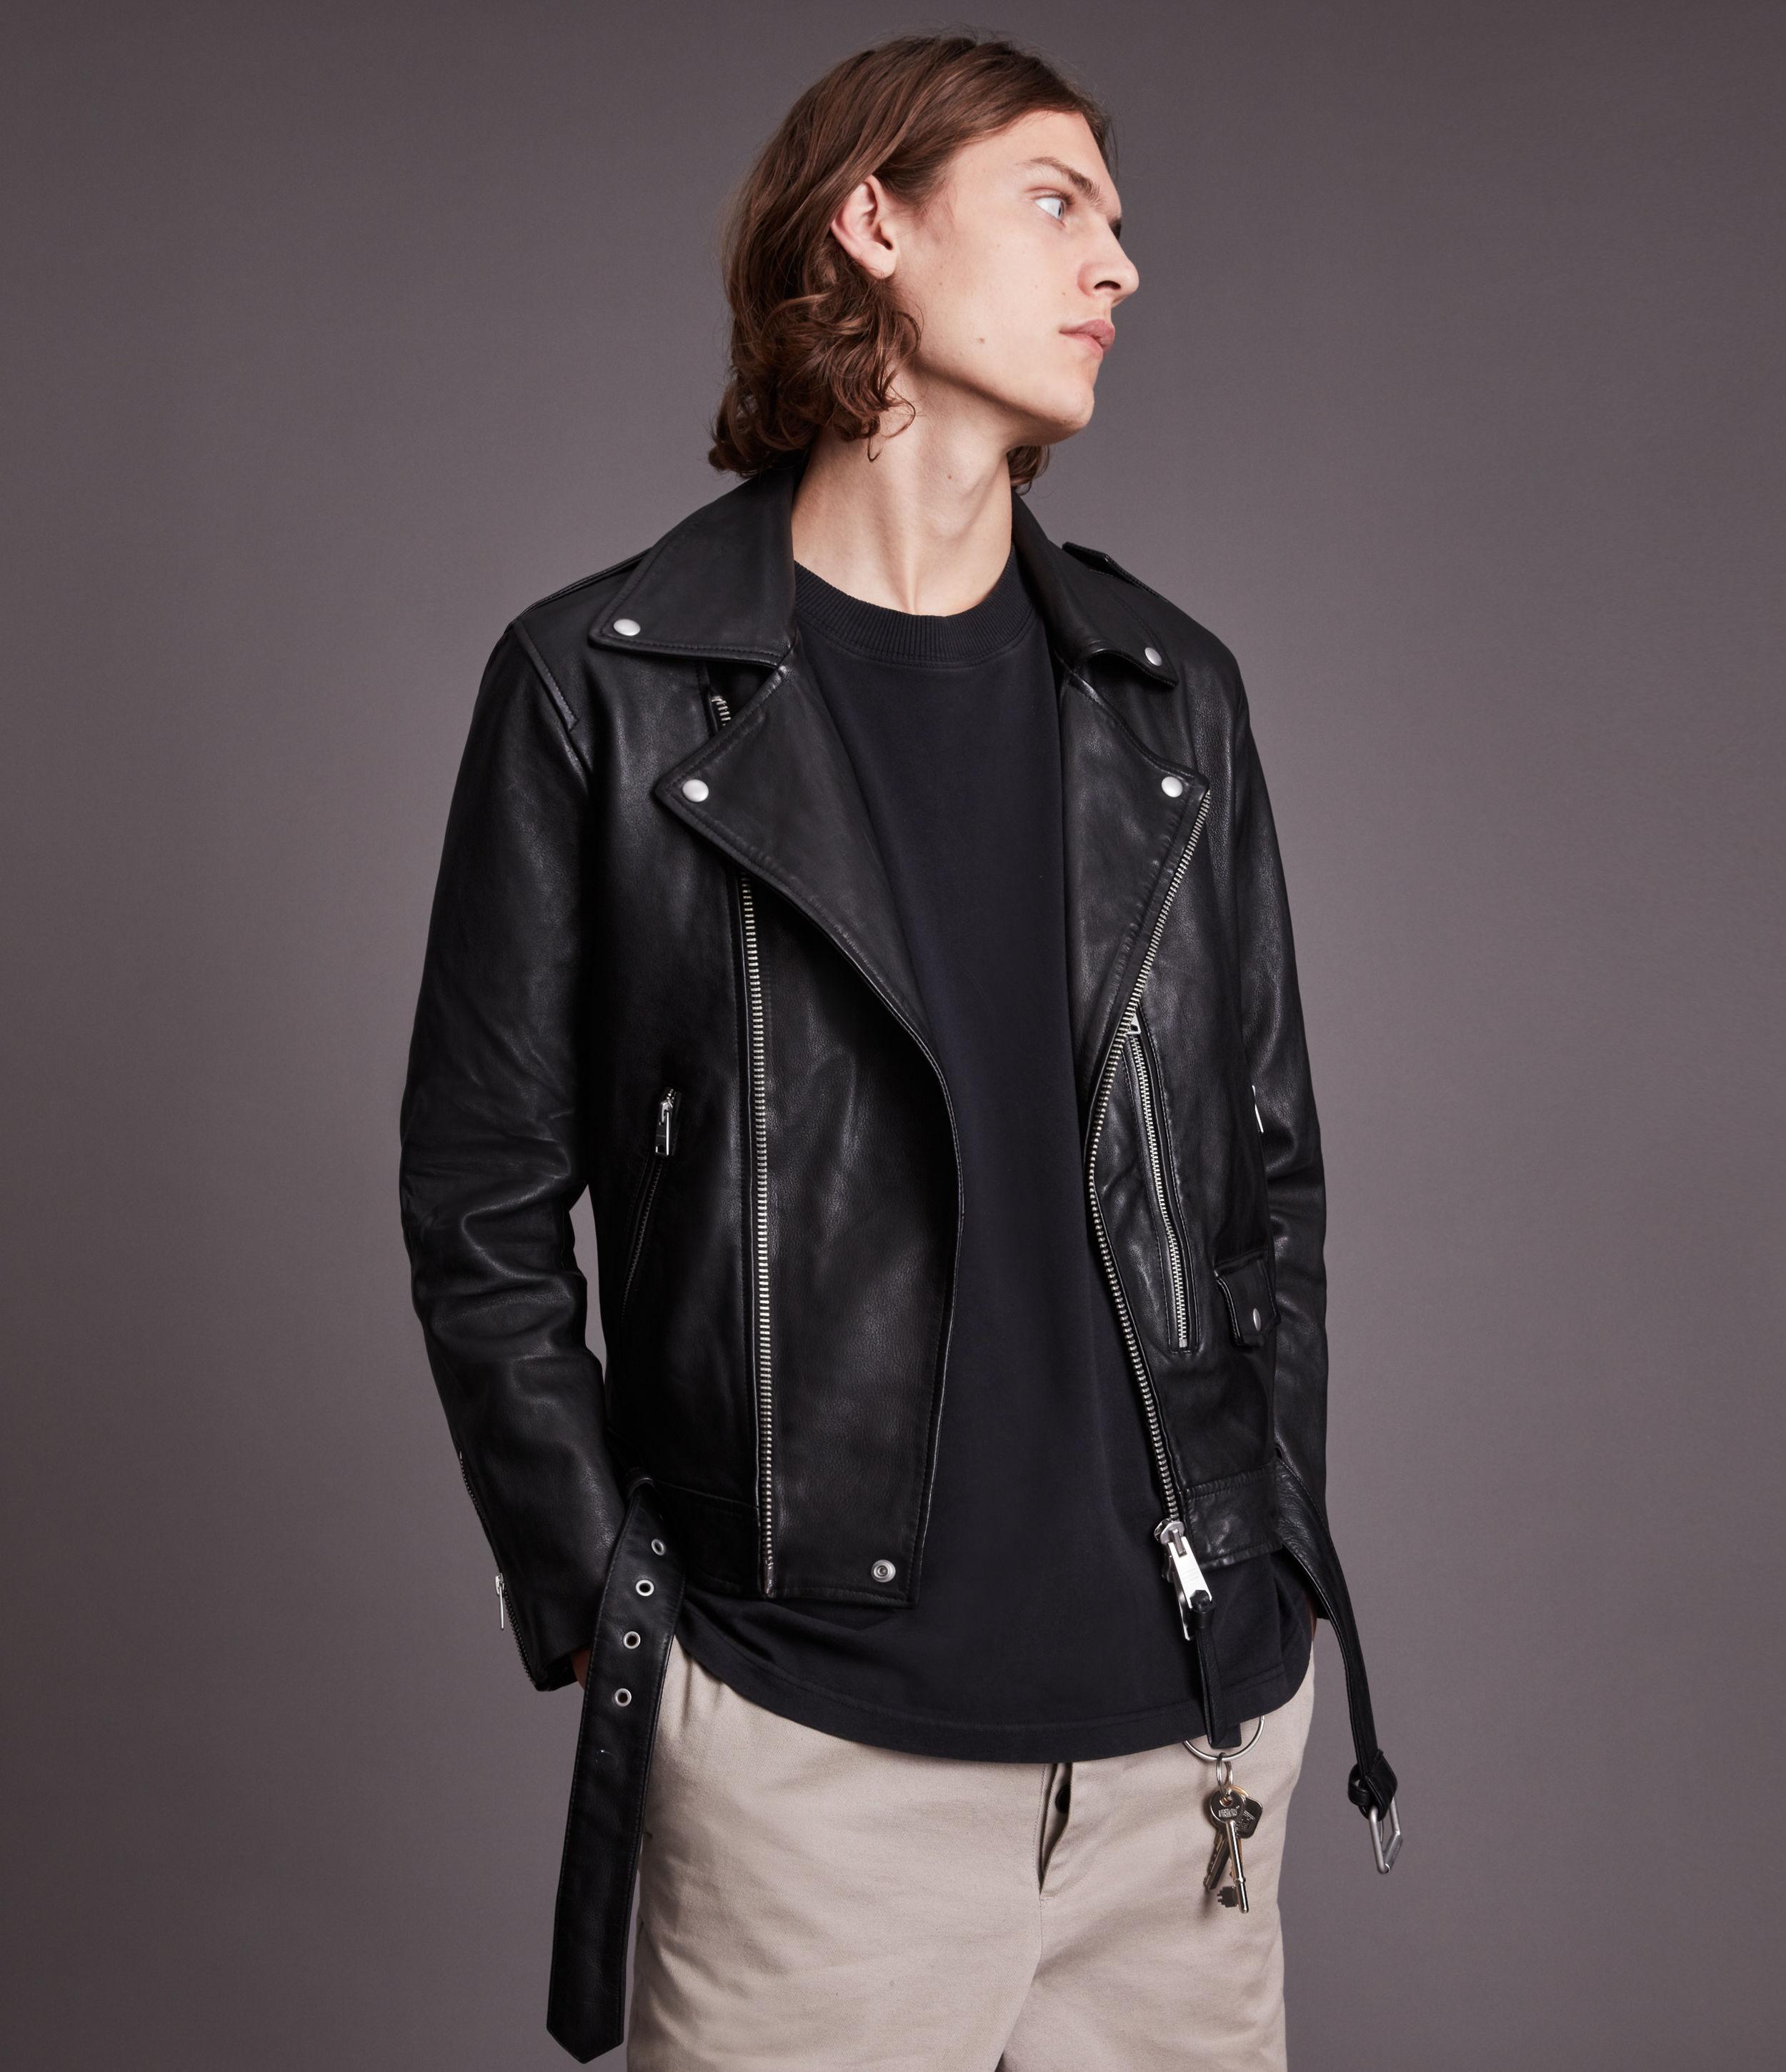 AllSaints Dren Leather Biker Jacket in Black for Men - Lyst